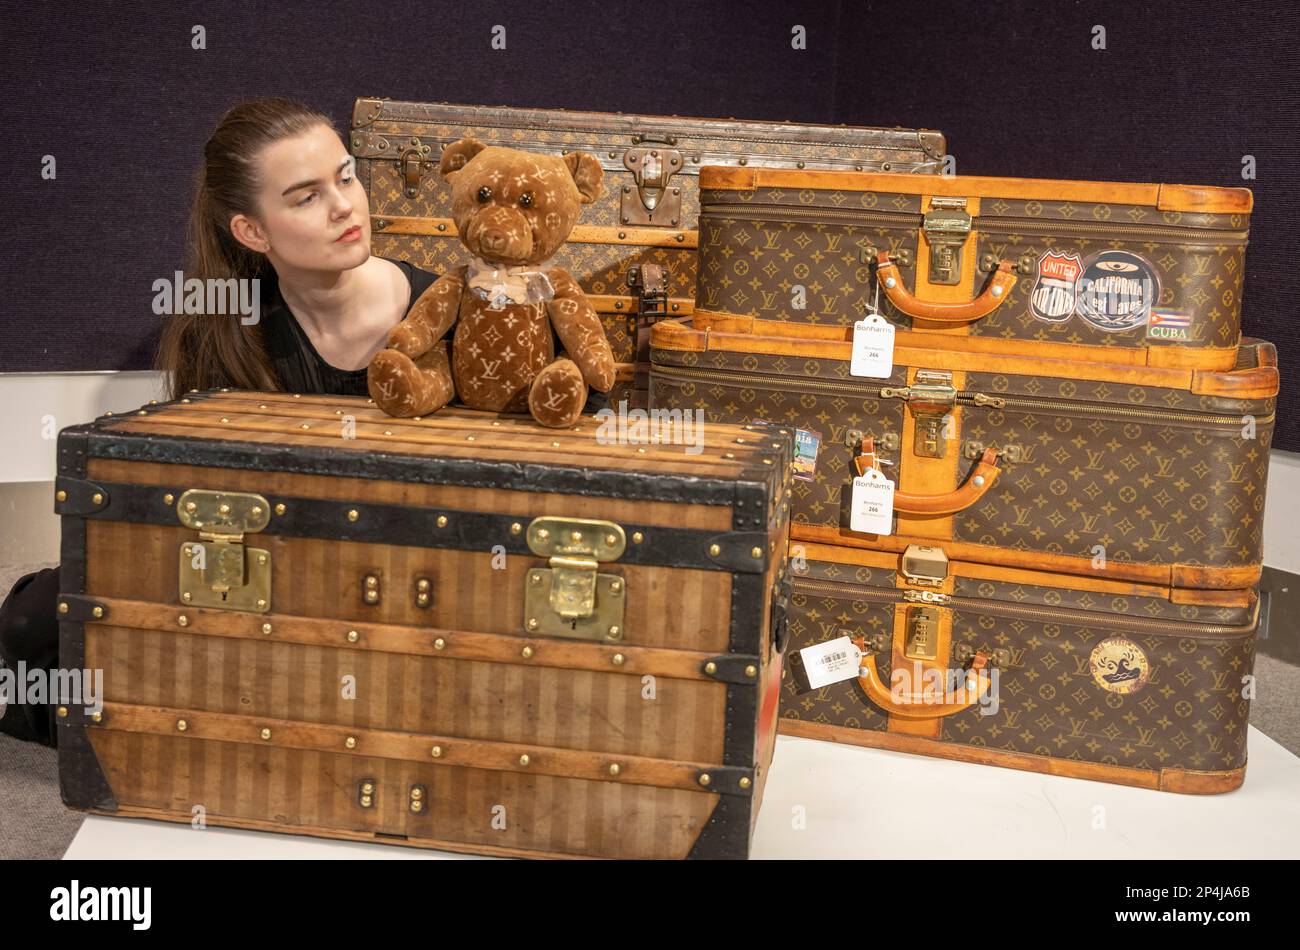 Louis Vuitton Monogram Doudou Teddy Bear Limited Edition 2017